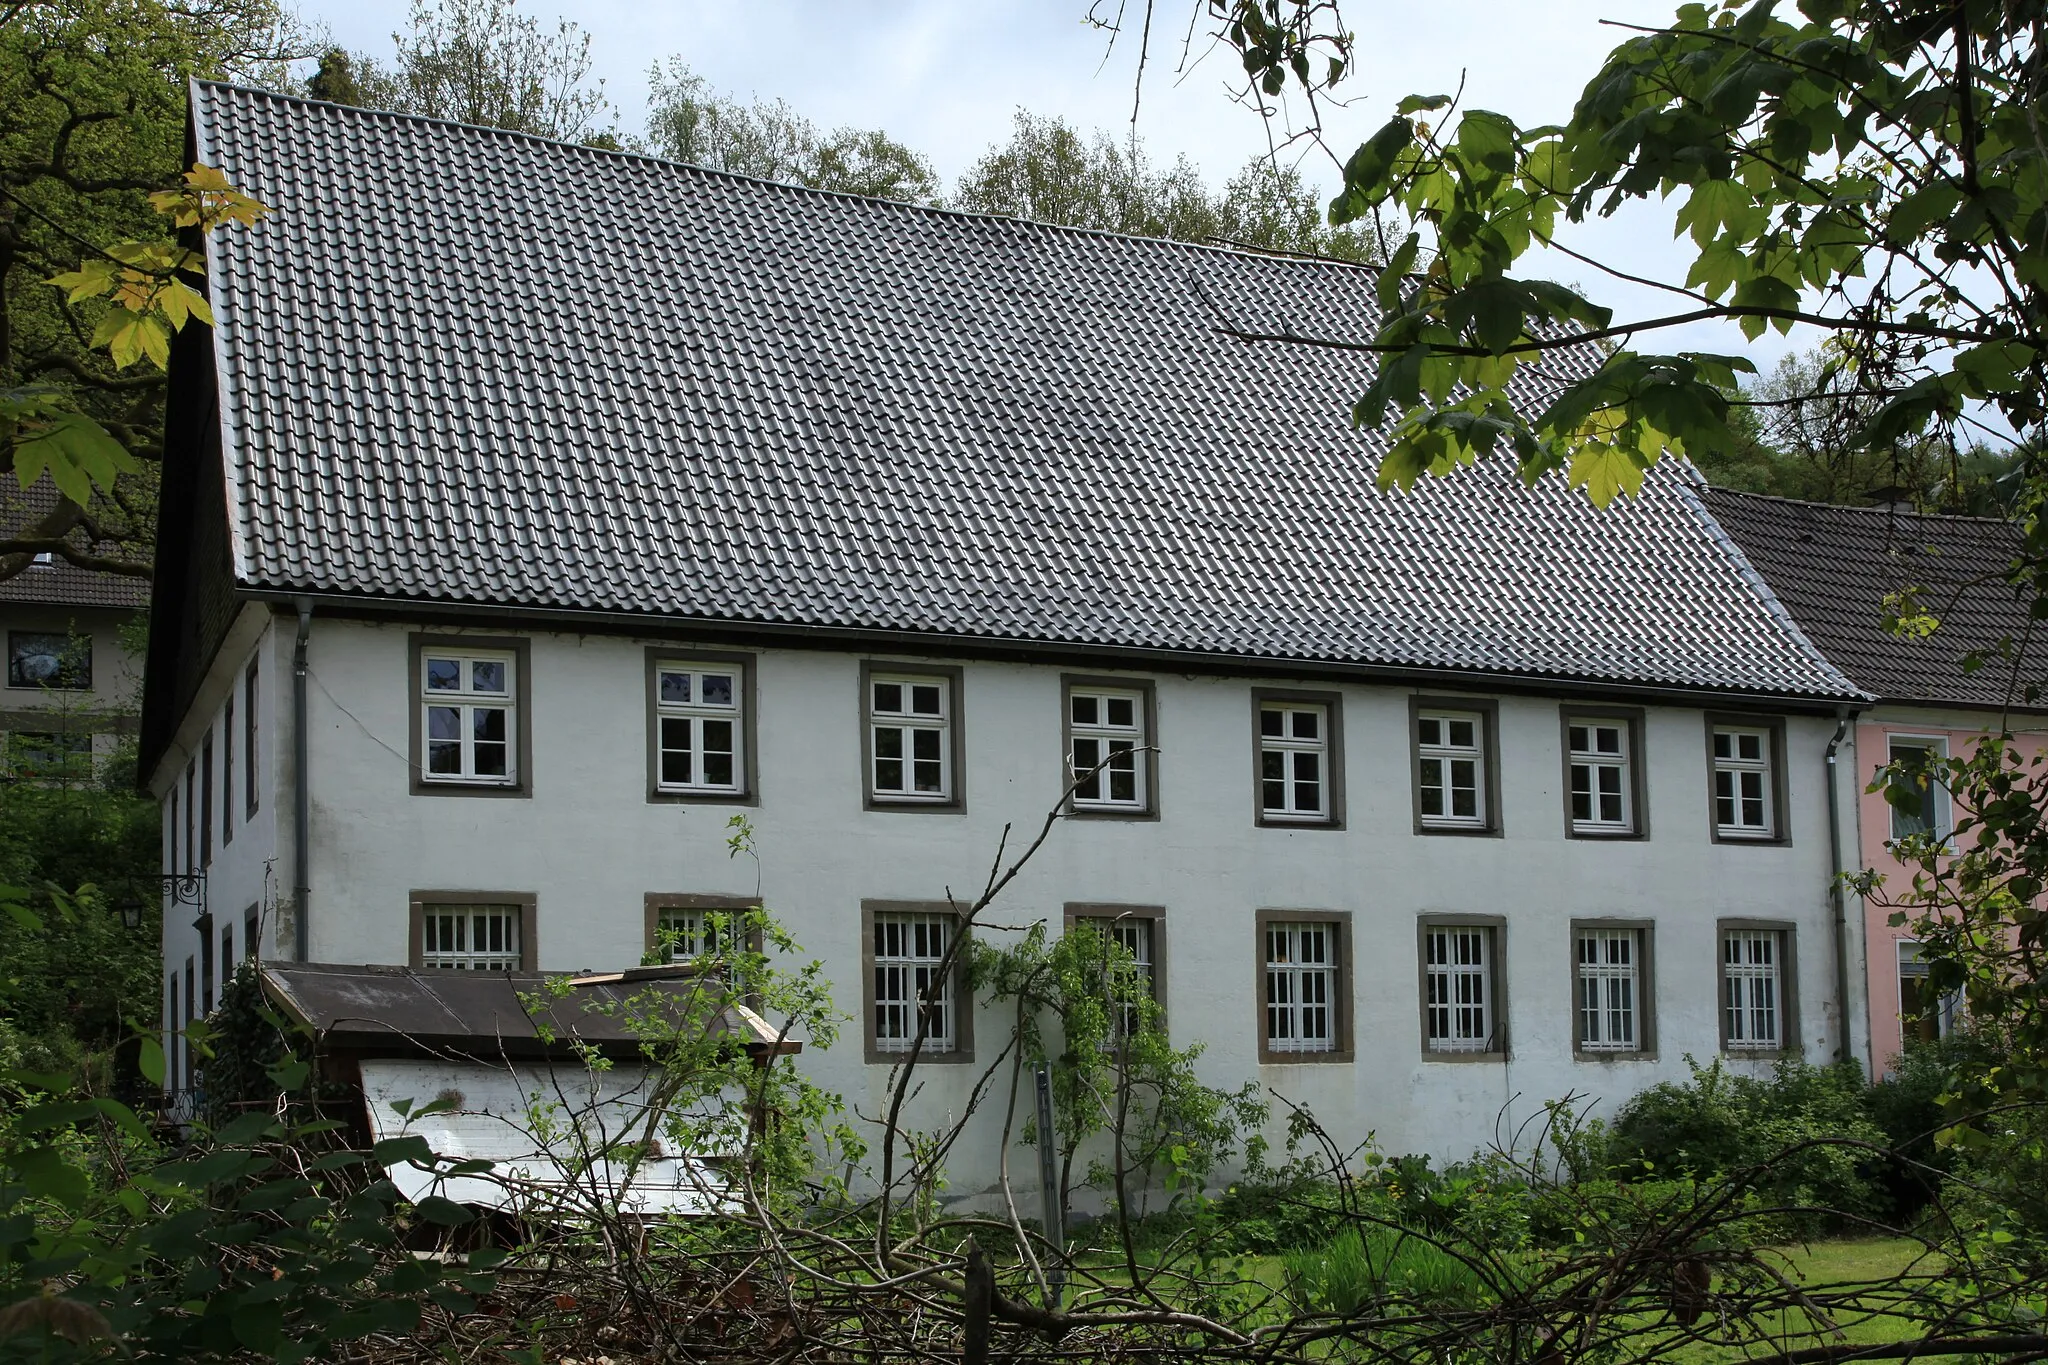 Photo showing: Reidemeisterhaus Voswinkel, Jubachweg 4 in Kierspe